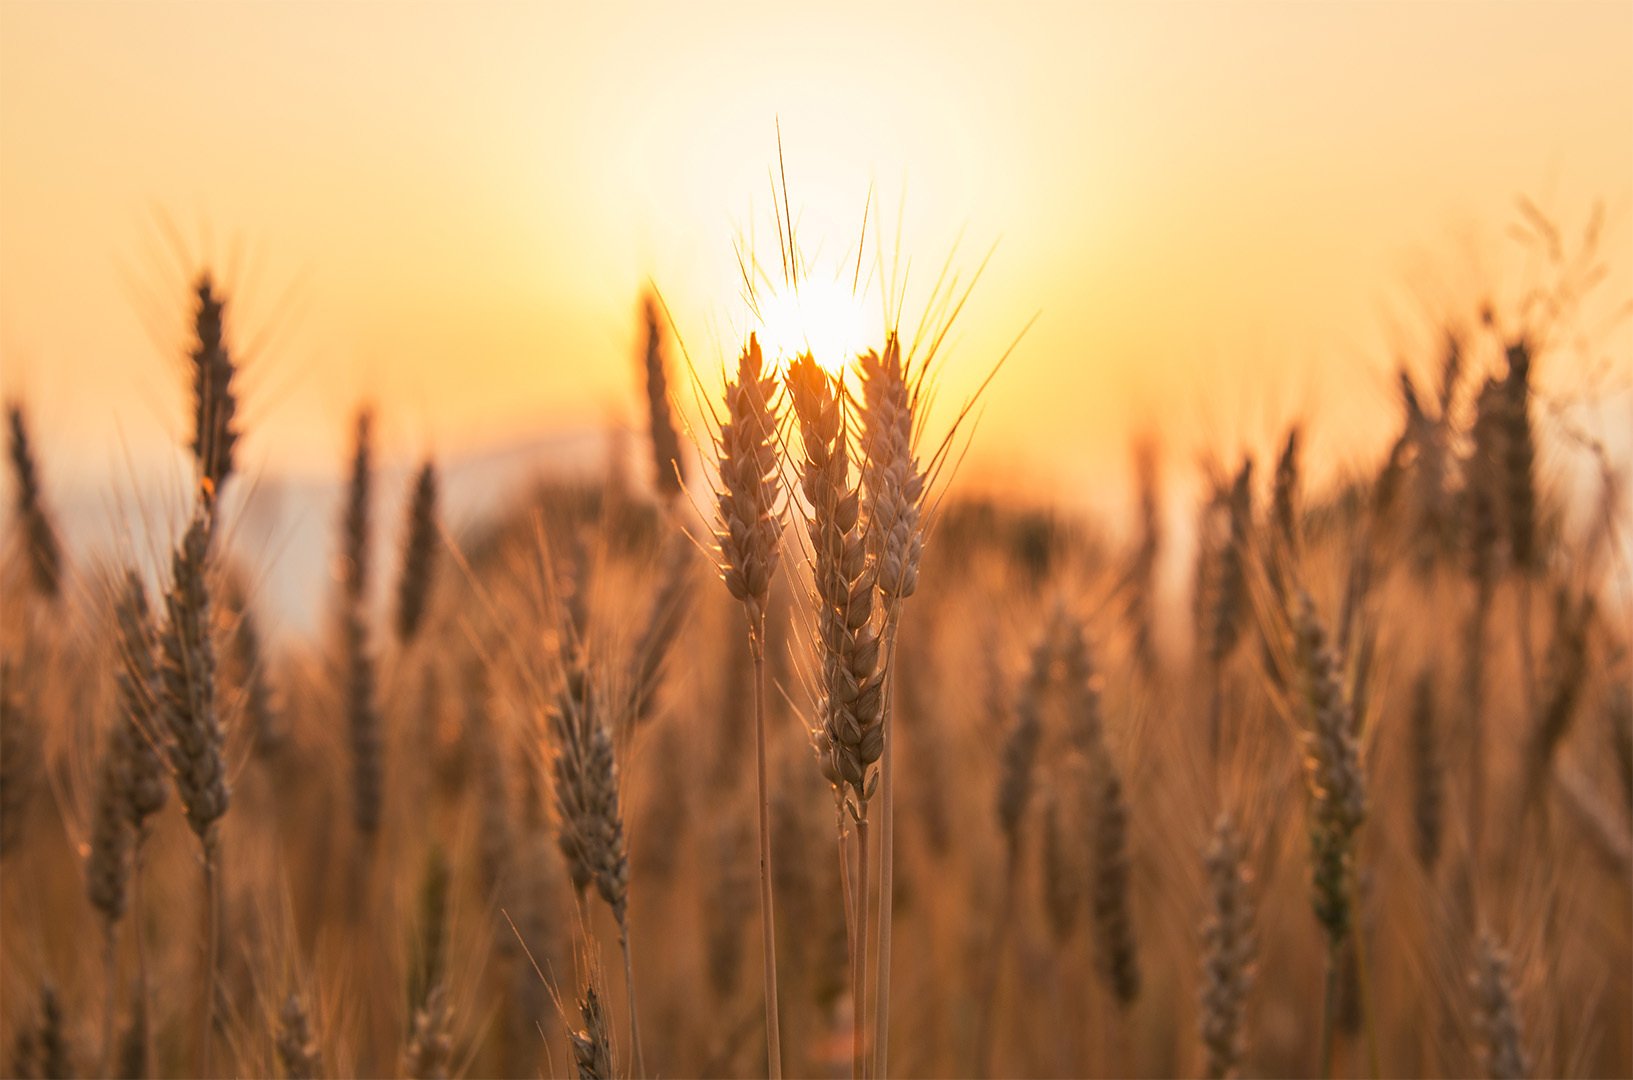 Wheat in rural community